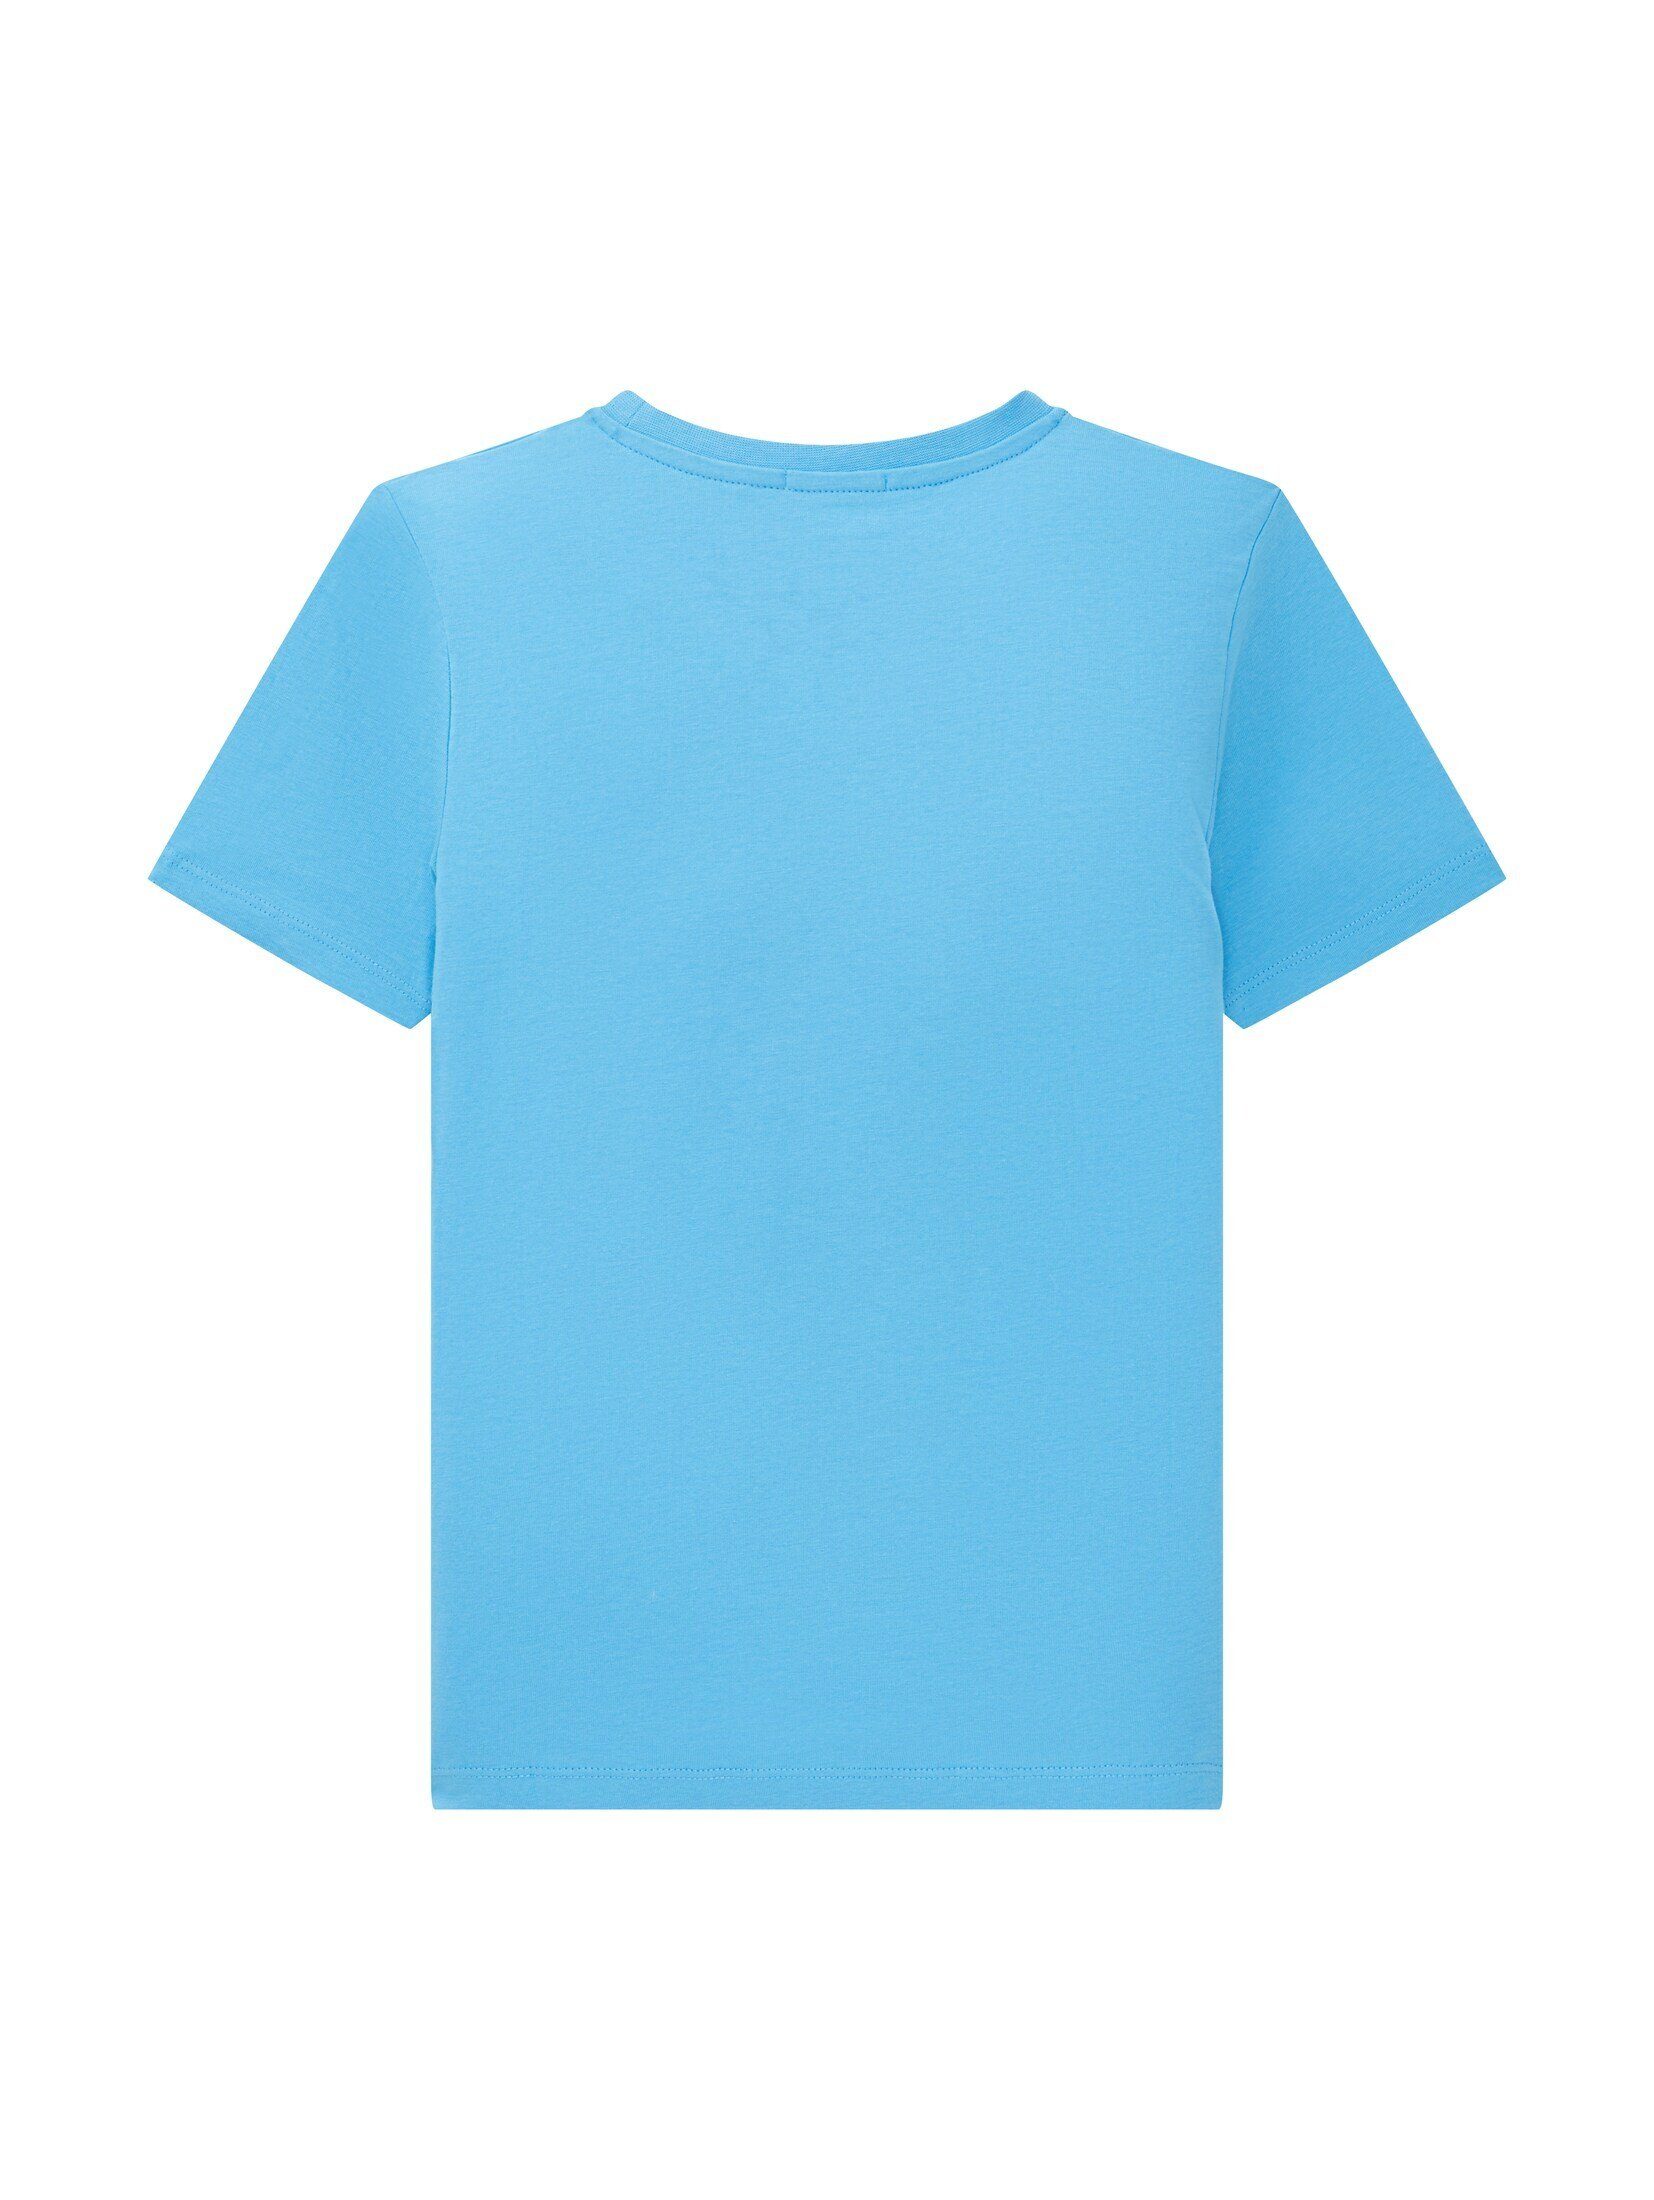 Fotoprint sky rainy mit T-Shirt blue TOM TAILOR T-Shirt